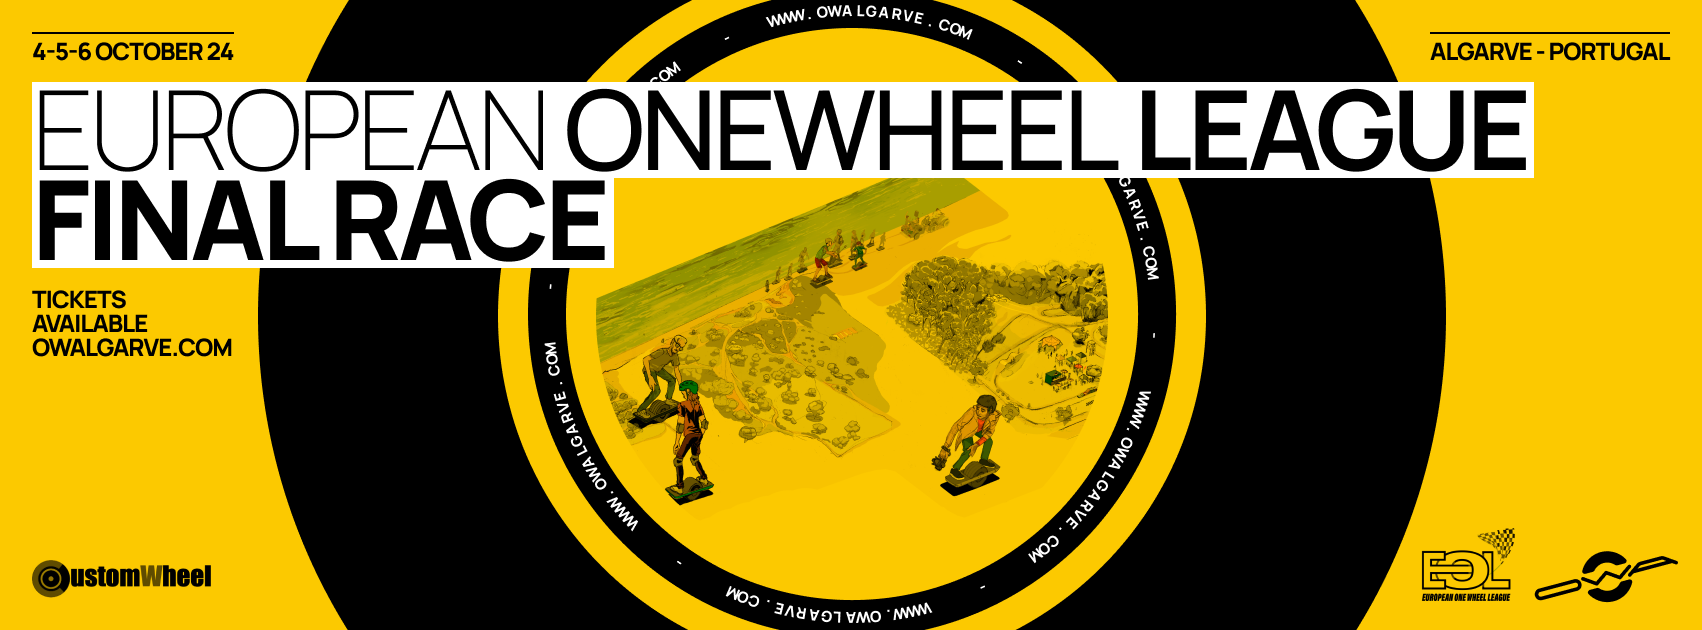 European onewheel league final race